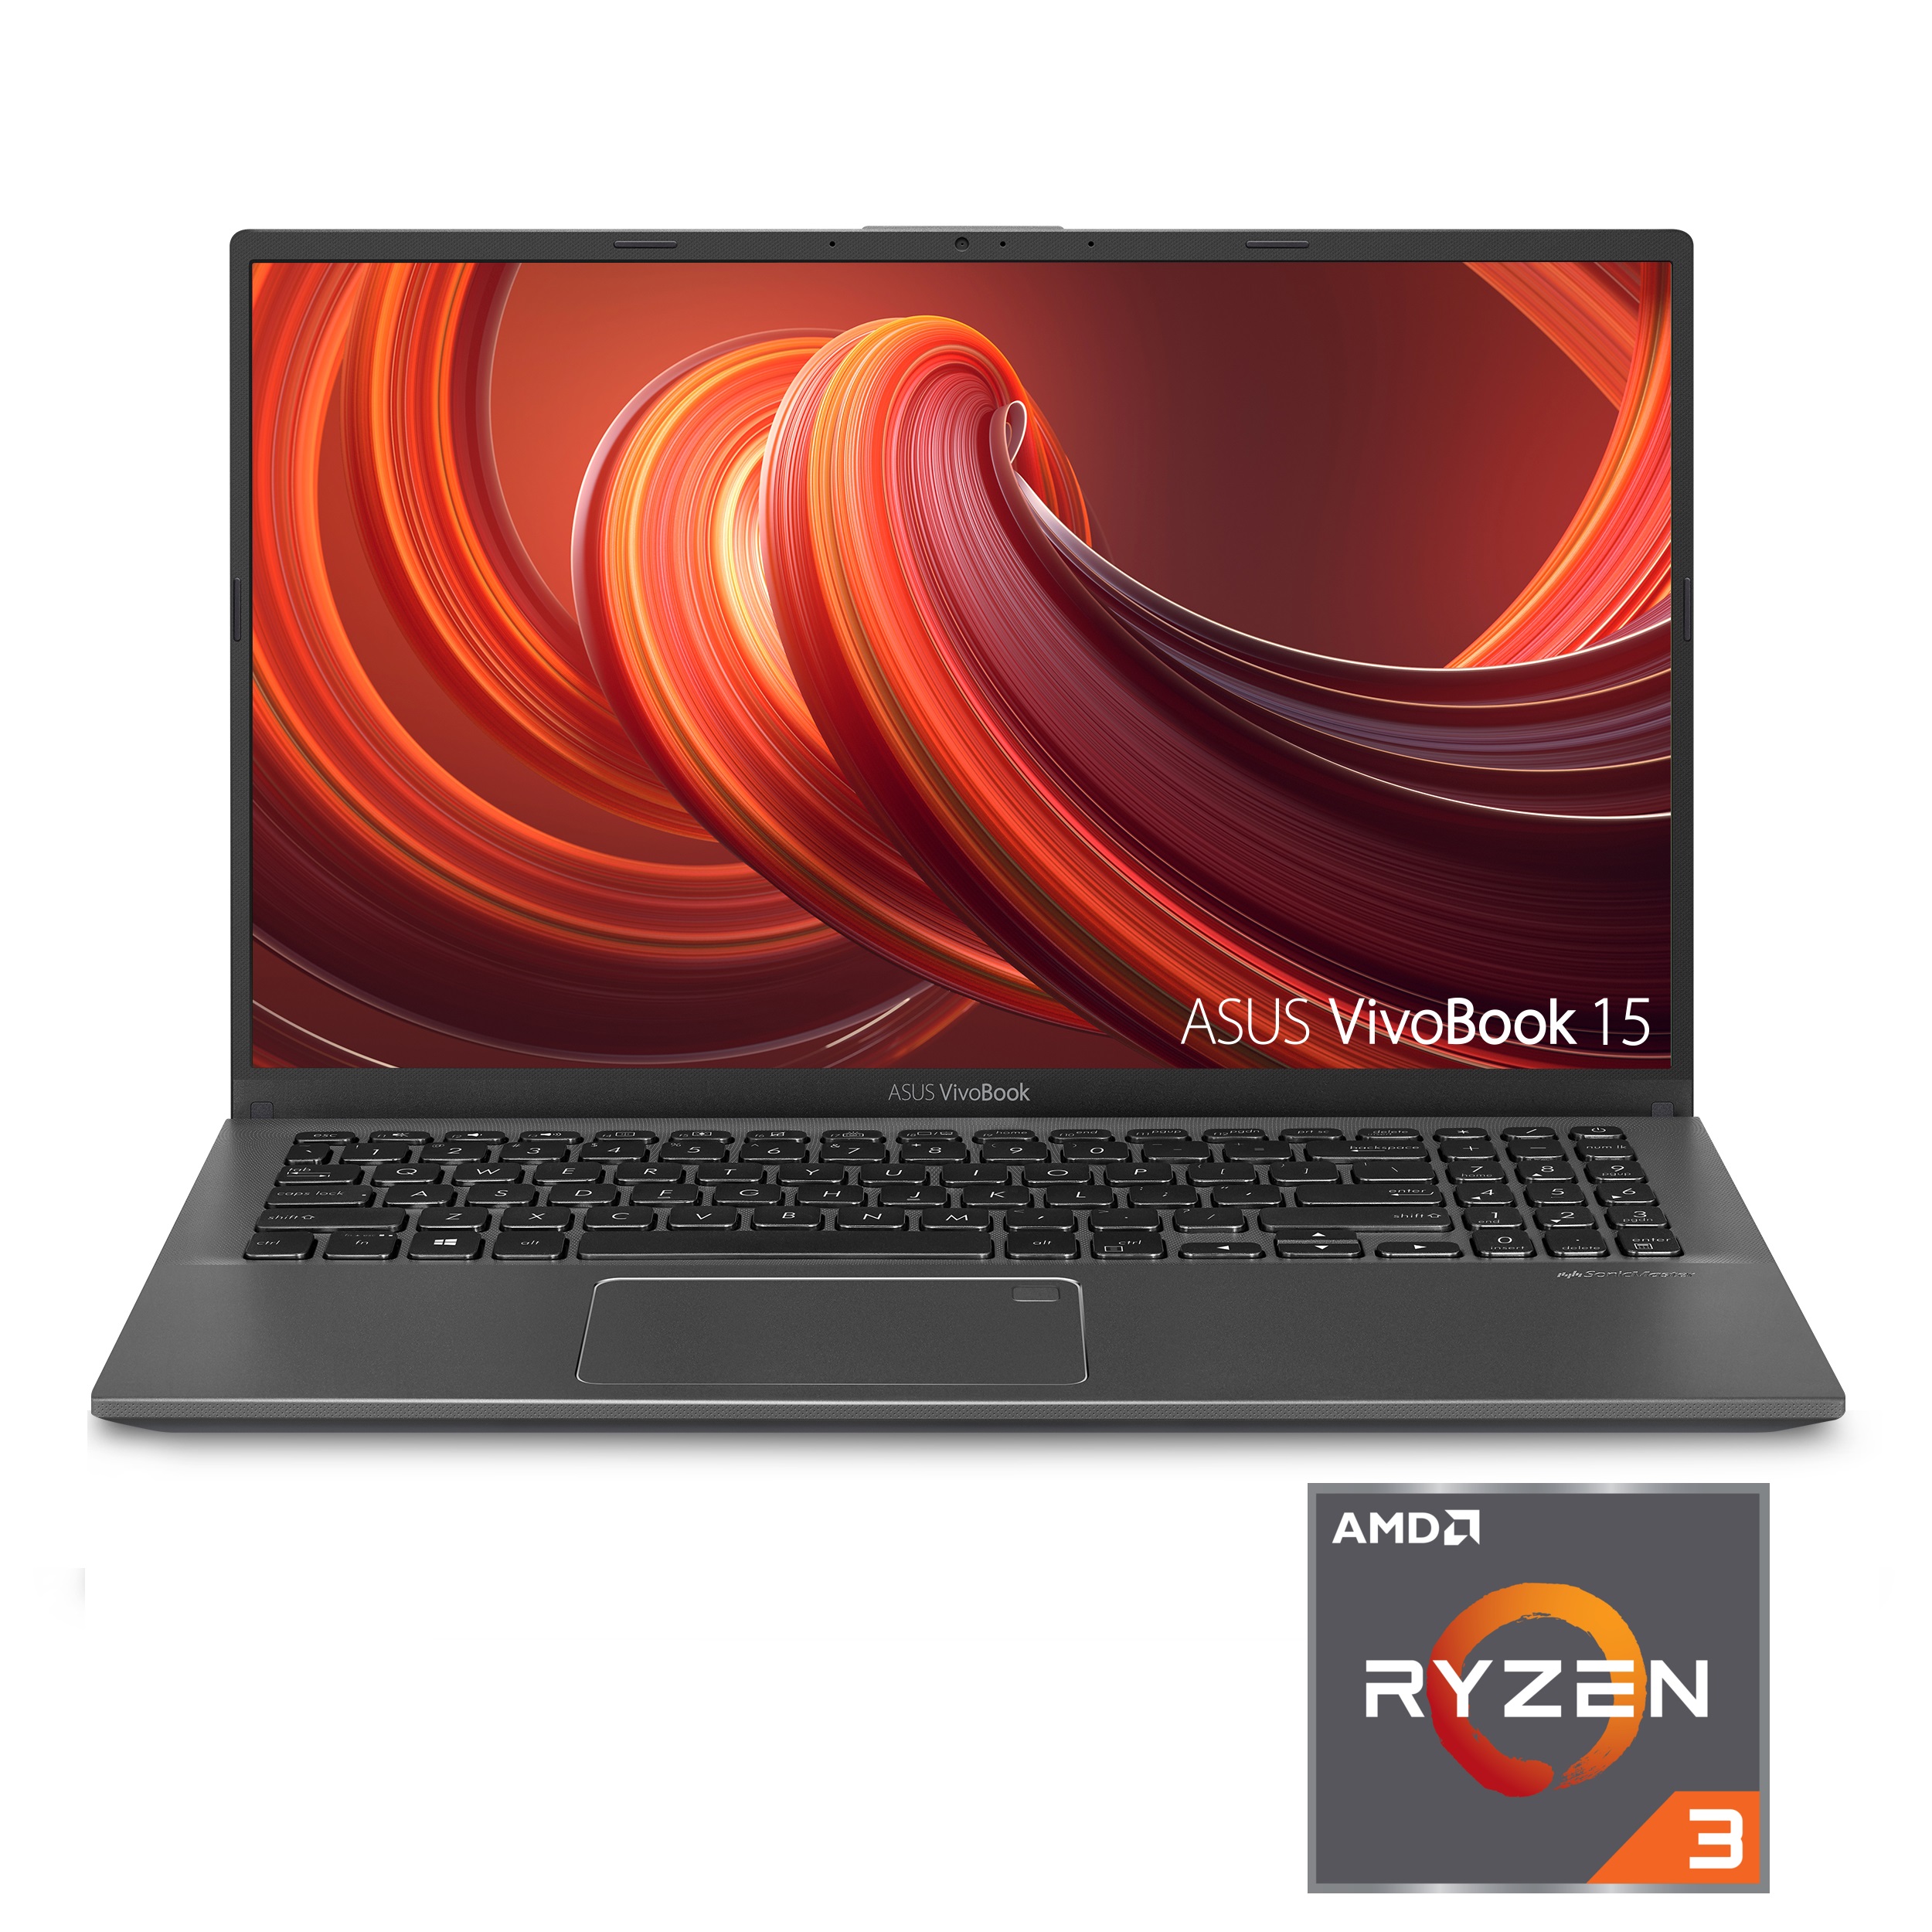 ASUS VivoBook 15.6" FHD Display, AMD Ryzen 3 3200U, 4GB DDR4, 128GB SSD, Windows 10 Home in S mode, Slate Gray, F512DA-WH31 Laptop - image 1 of 5